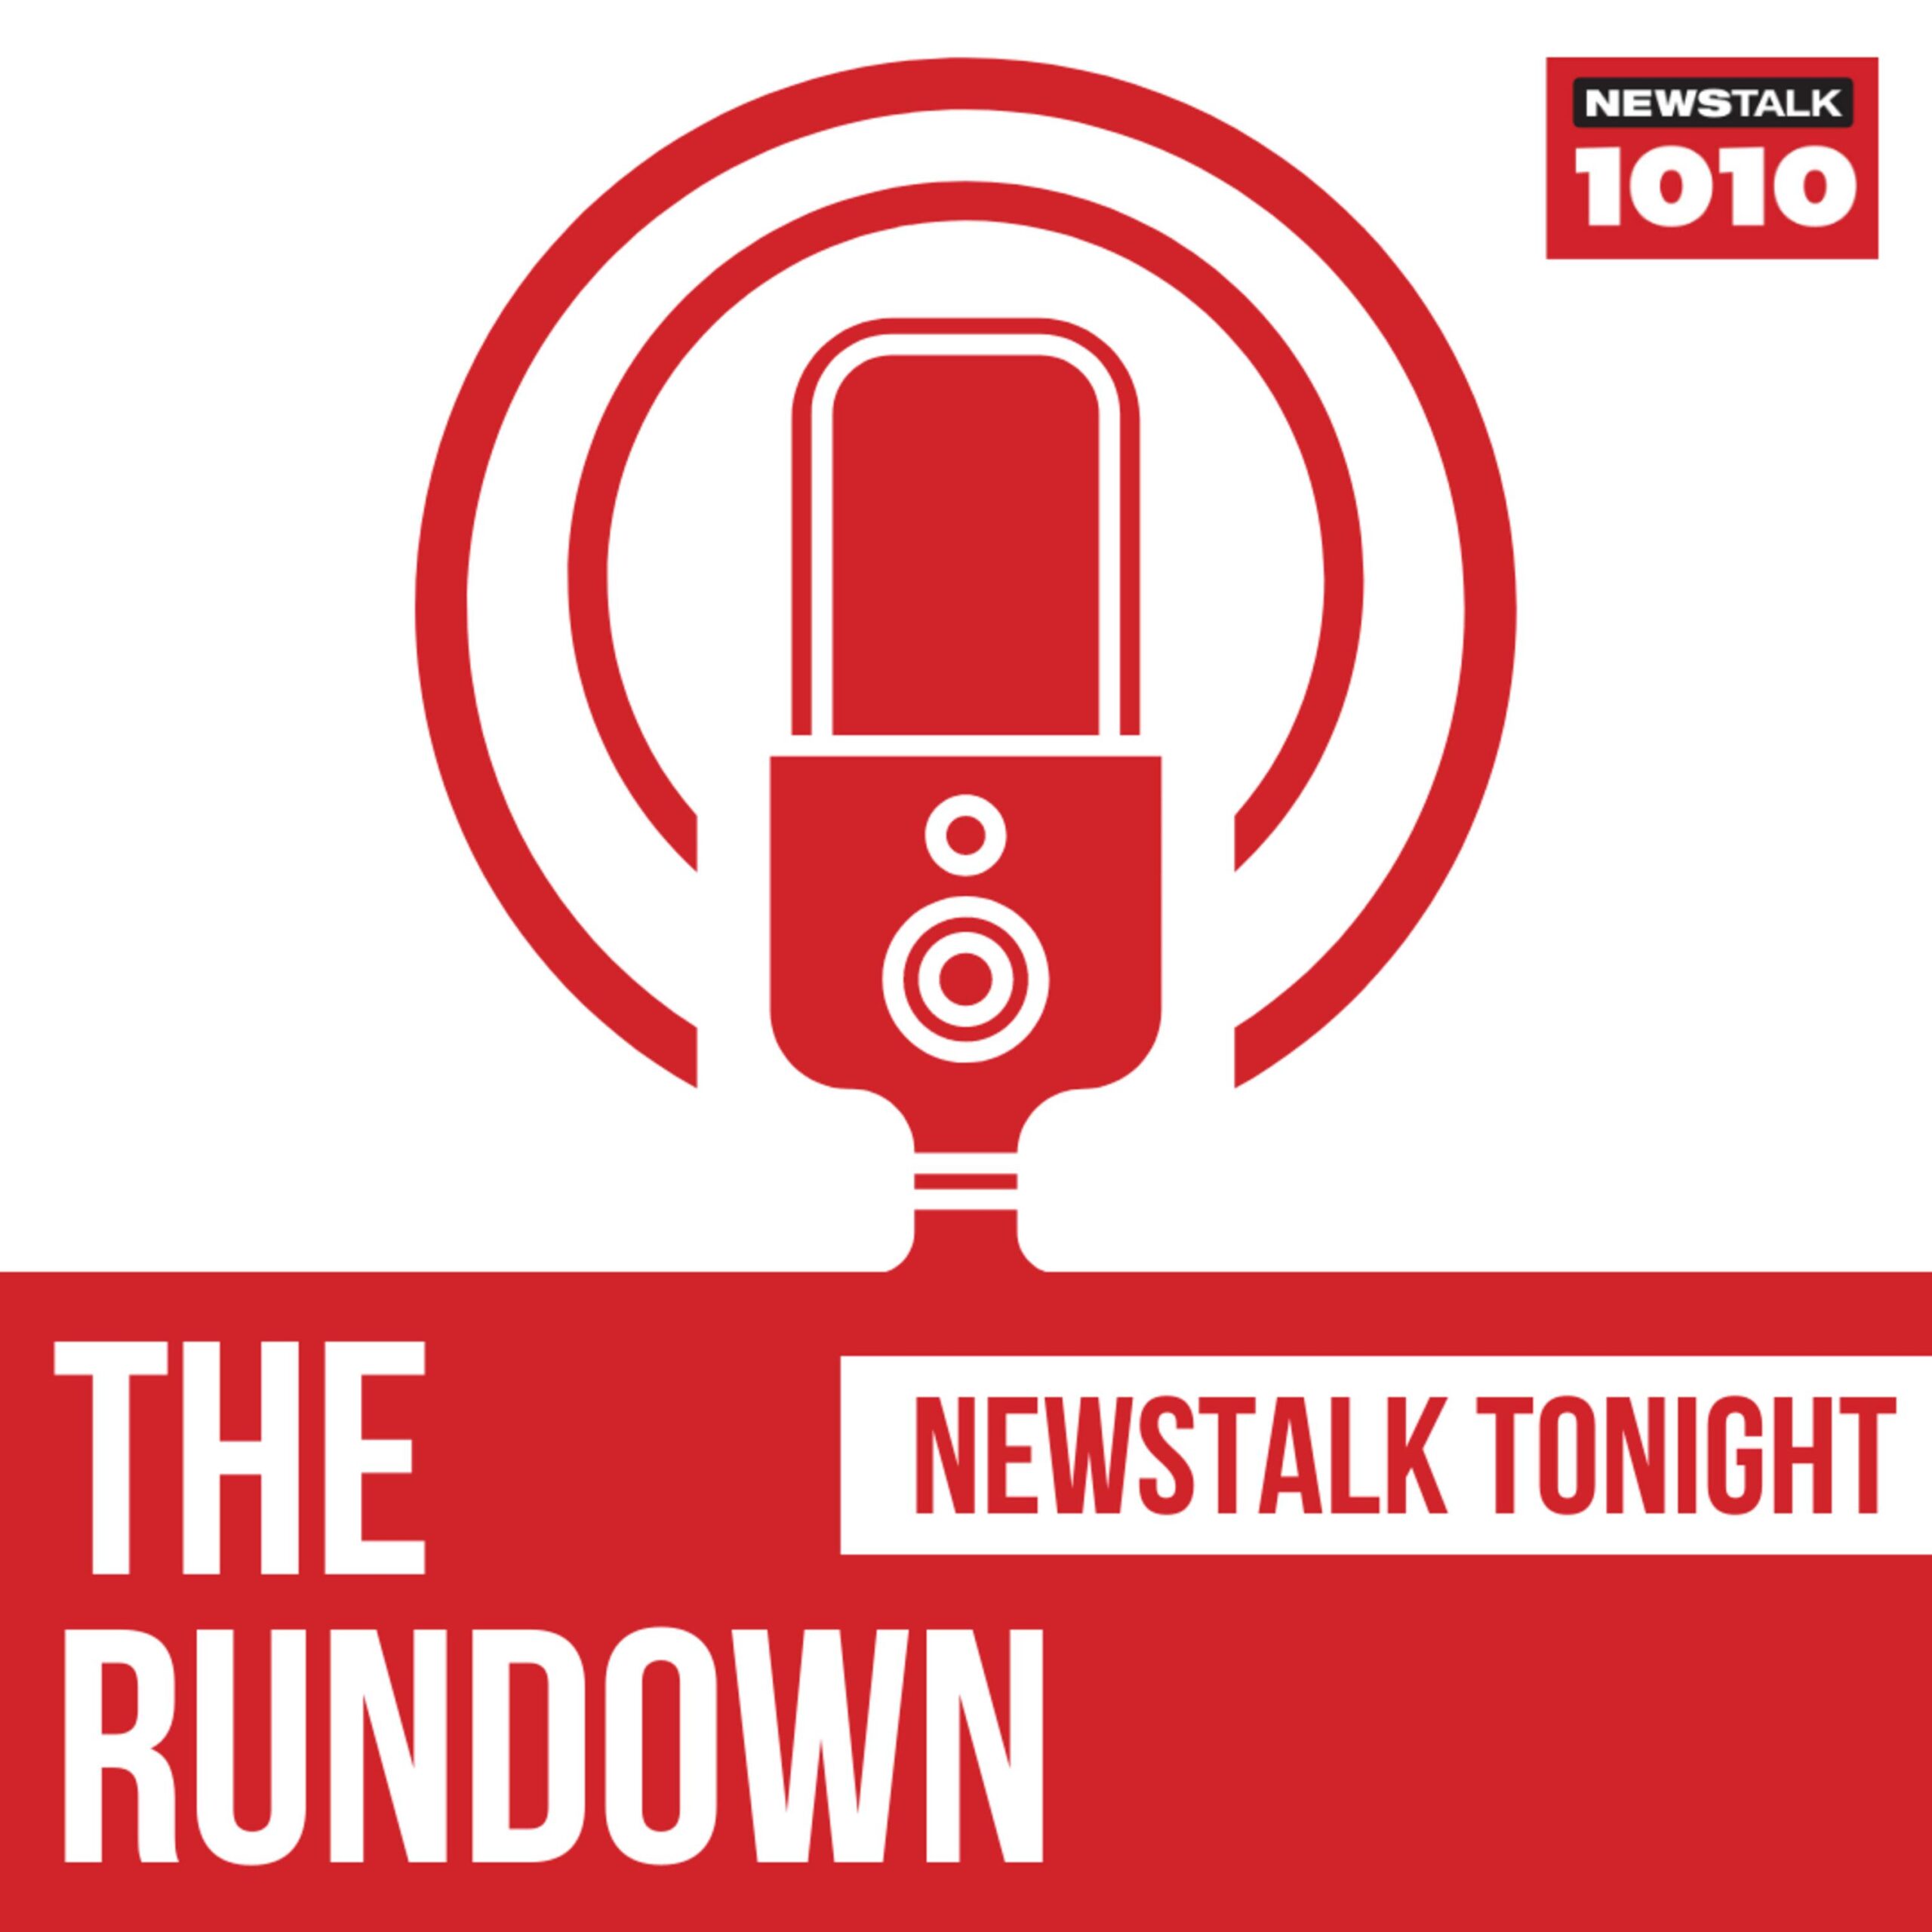 Newstalk 1010 The Rundown with Richard Crouse, Jon Liedtke & Stephen Murdoch